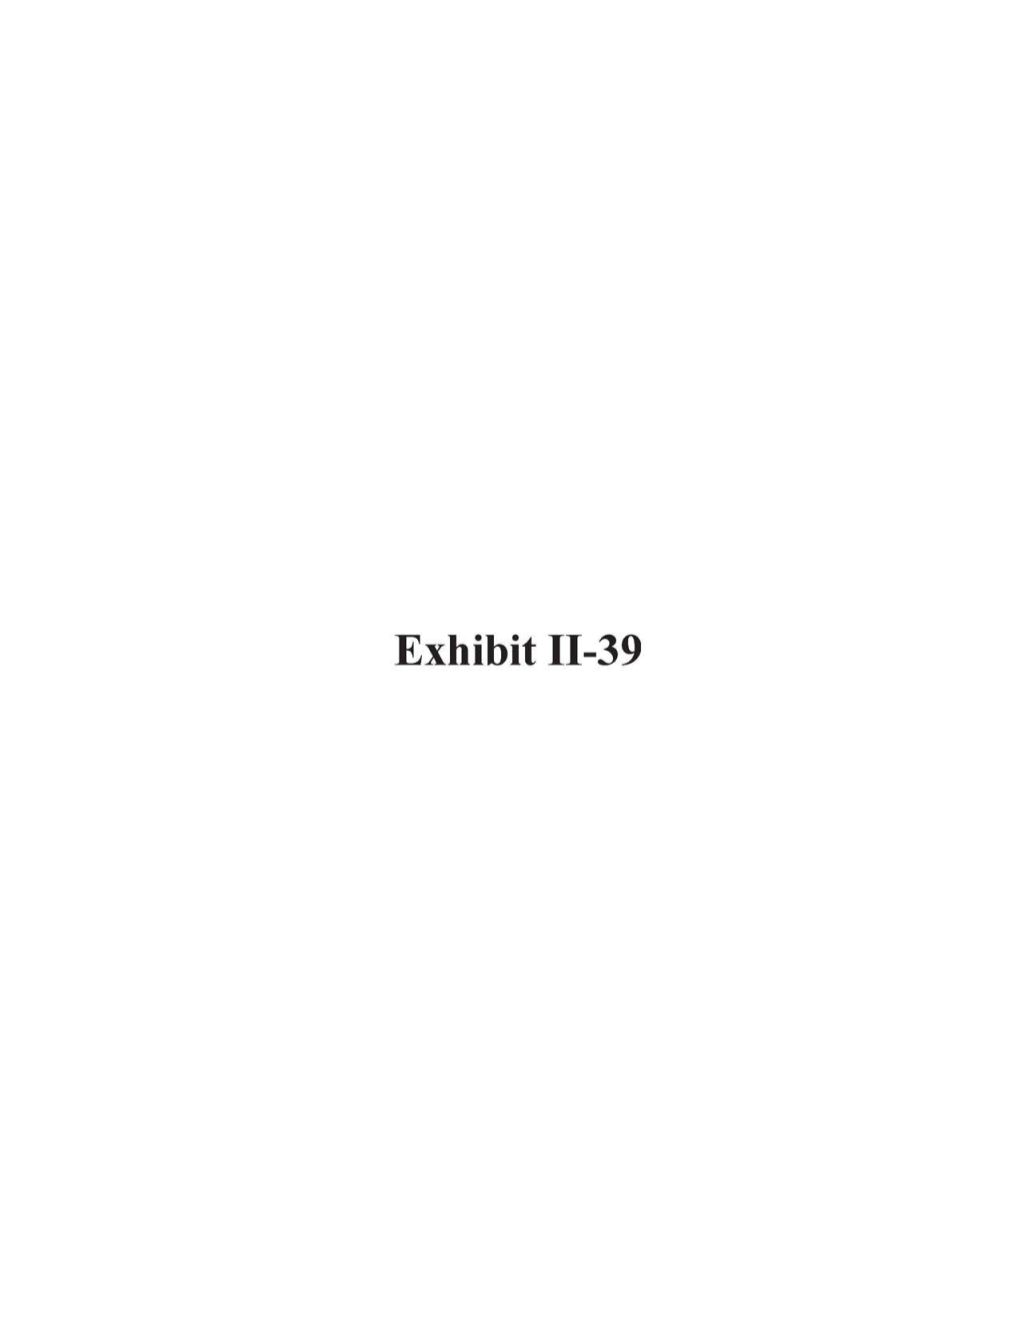 Exhibit II-39 Table of Contents